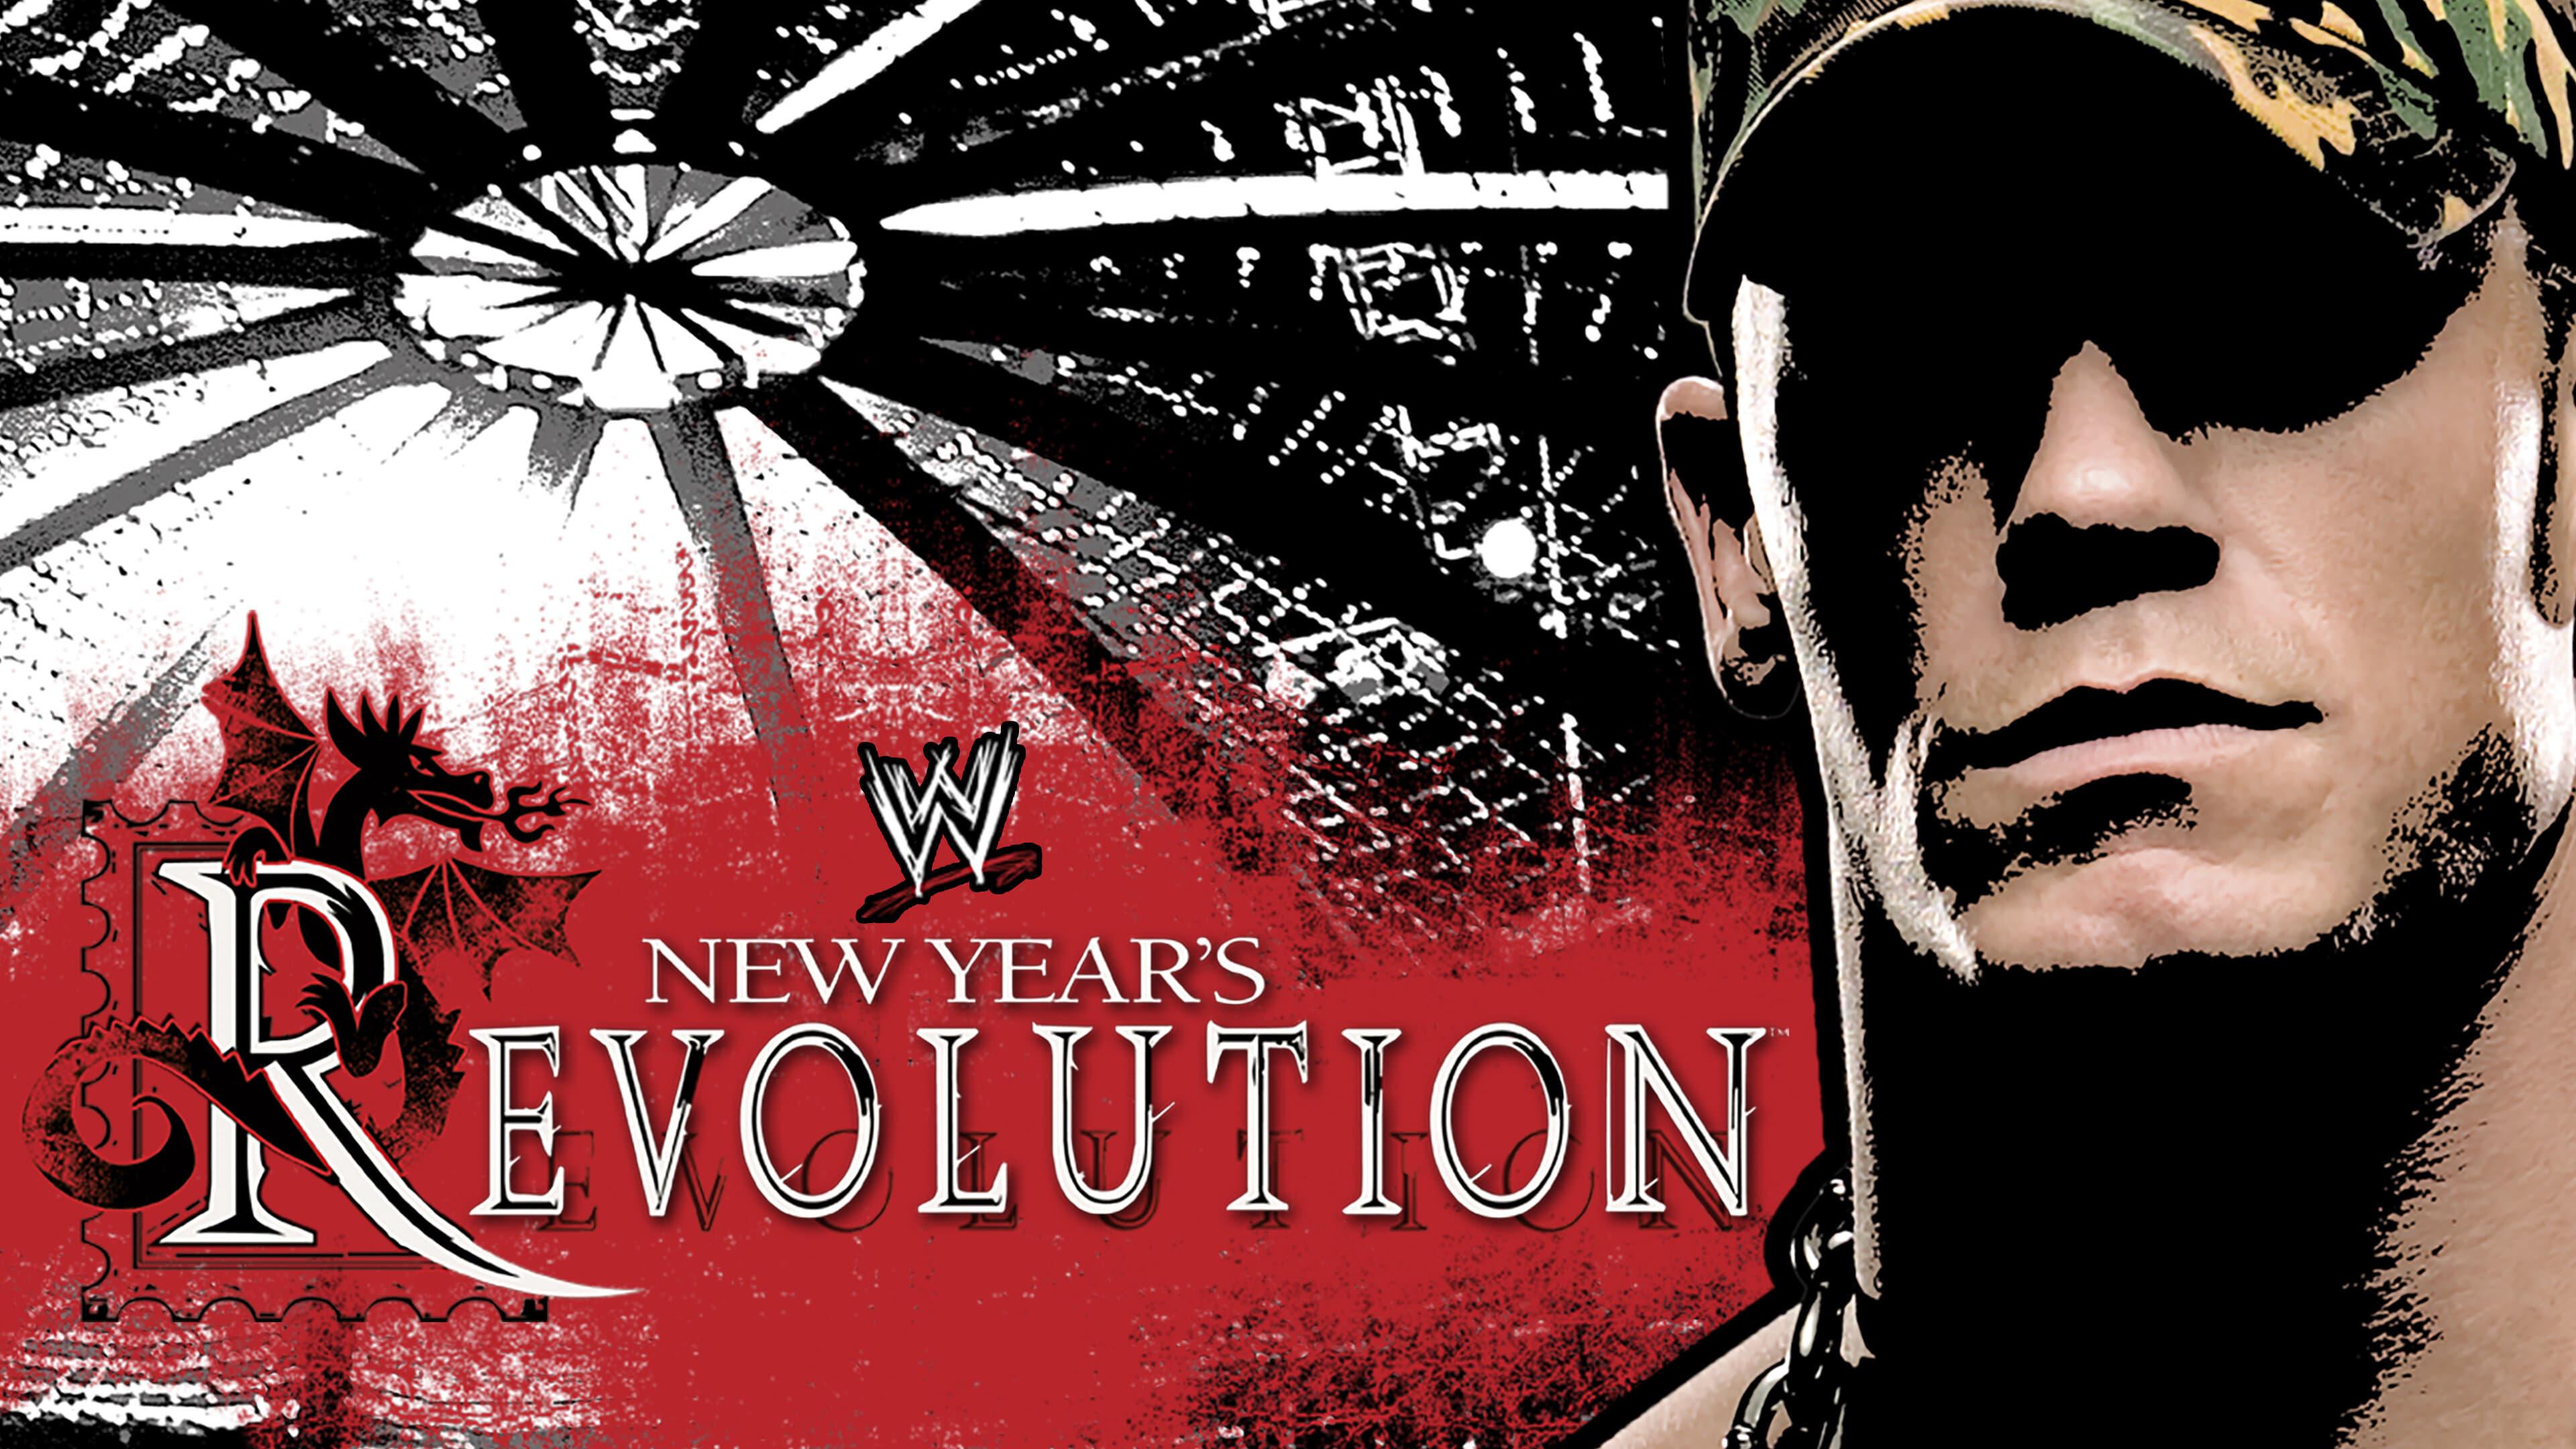 WWE New Year's Revolution 2006 backdrop